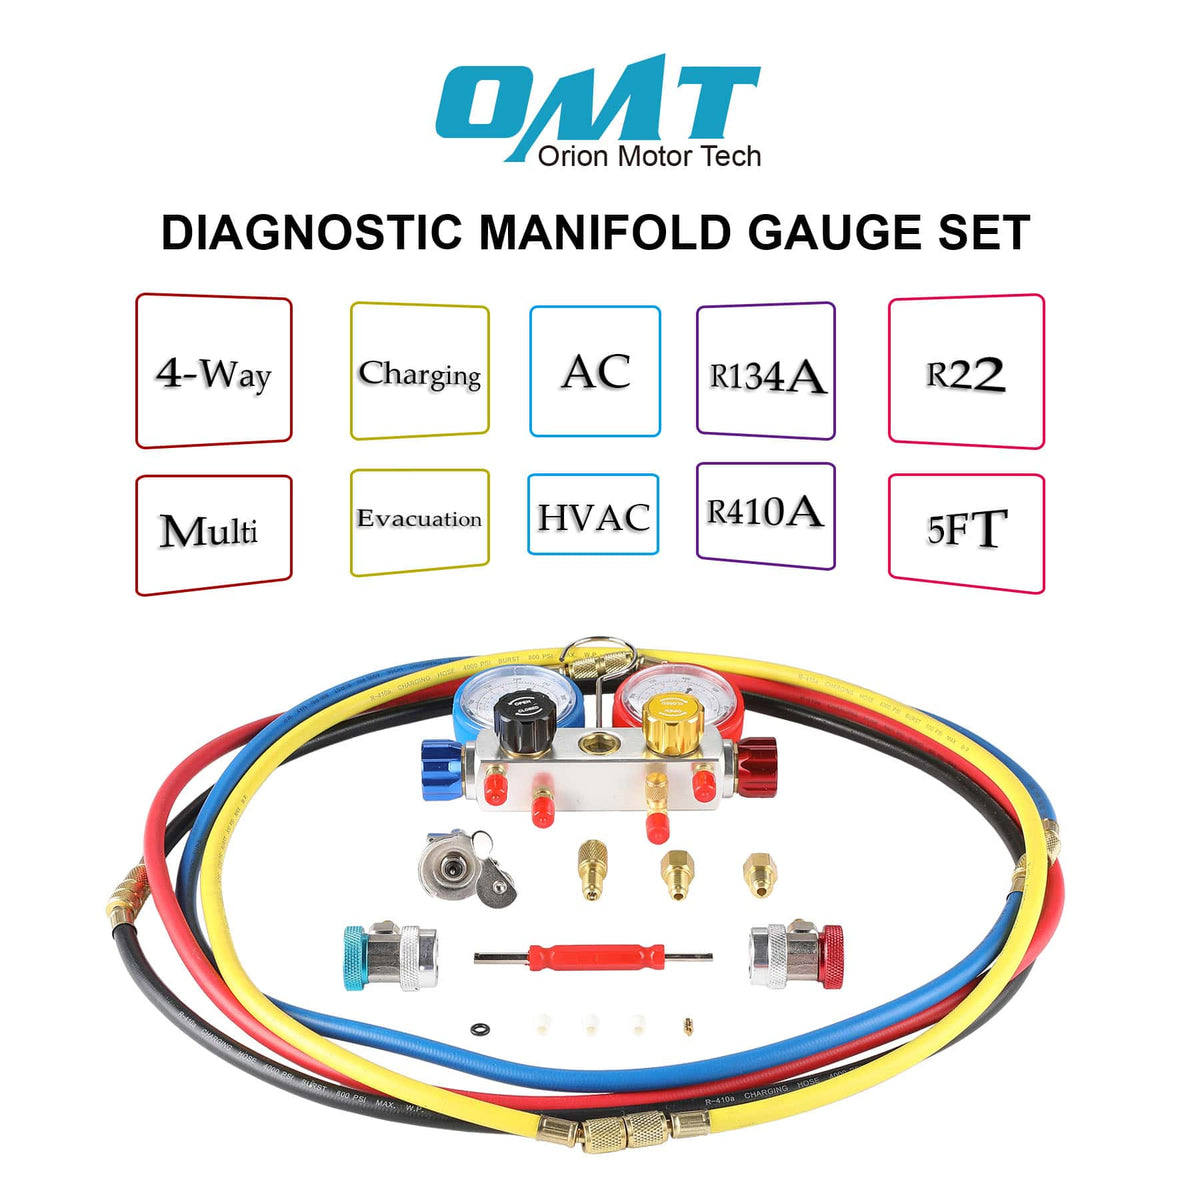 Diagnostic Manifold Gauge Set